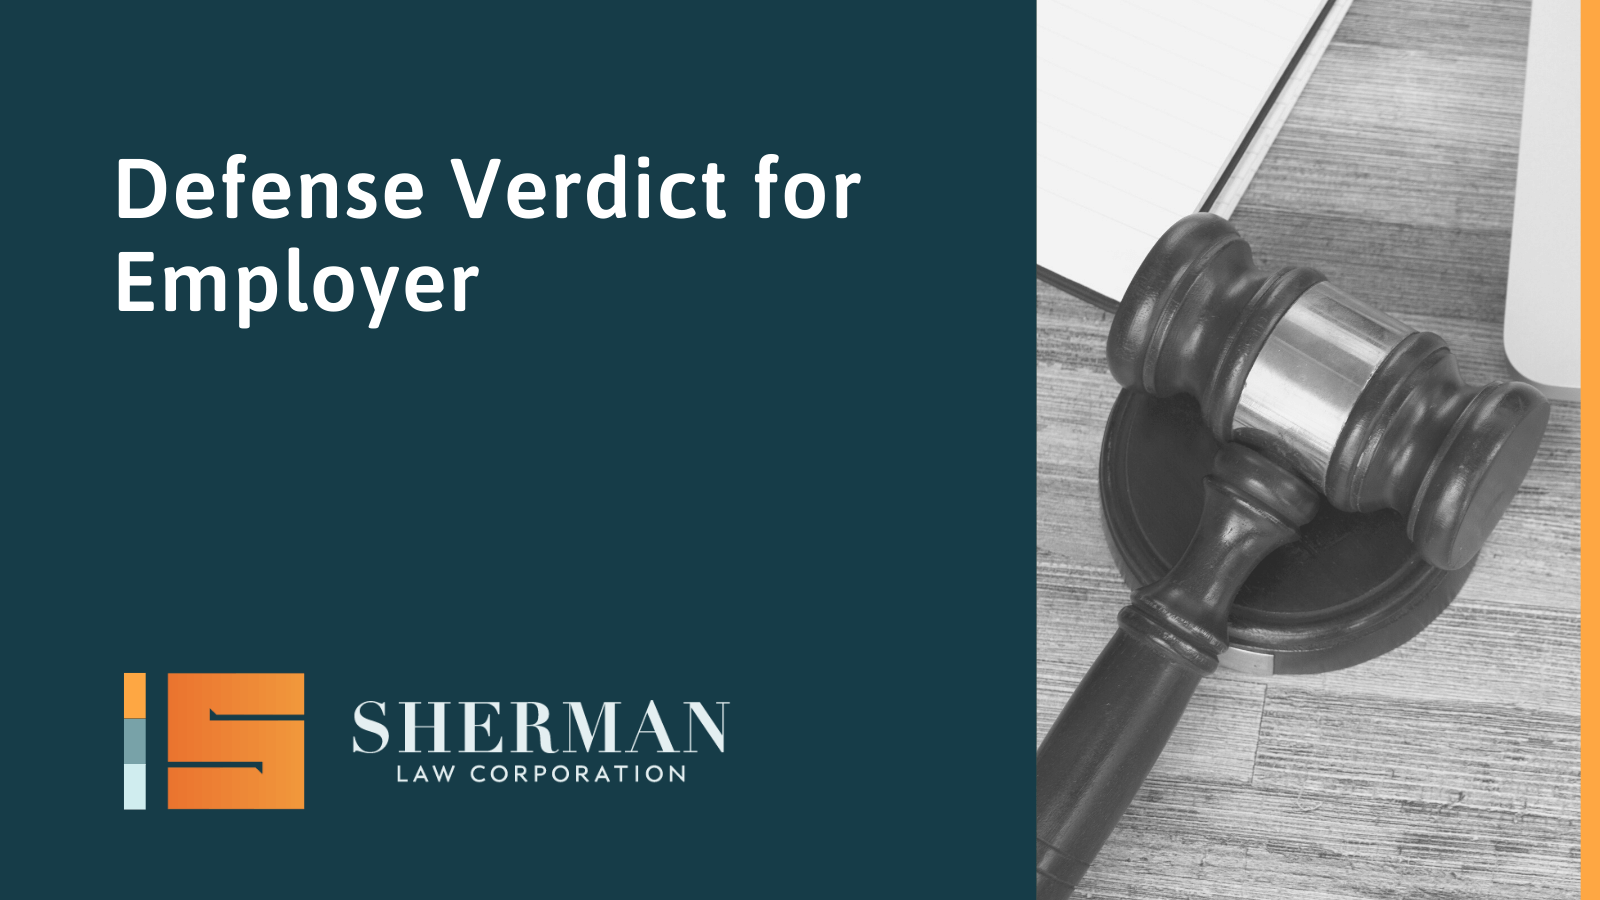 Defense Verdict for Employer- sherman law corporation